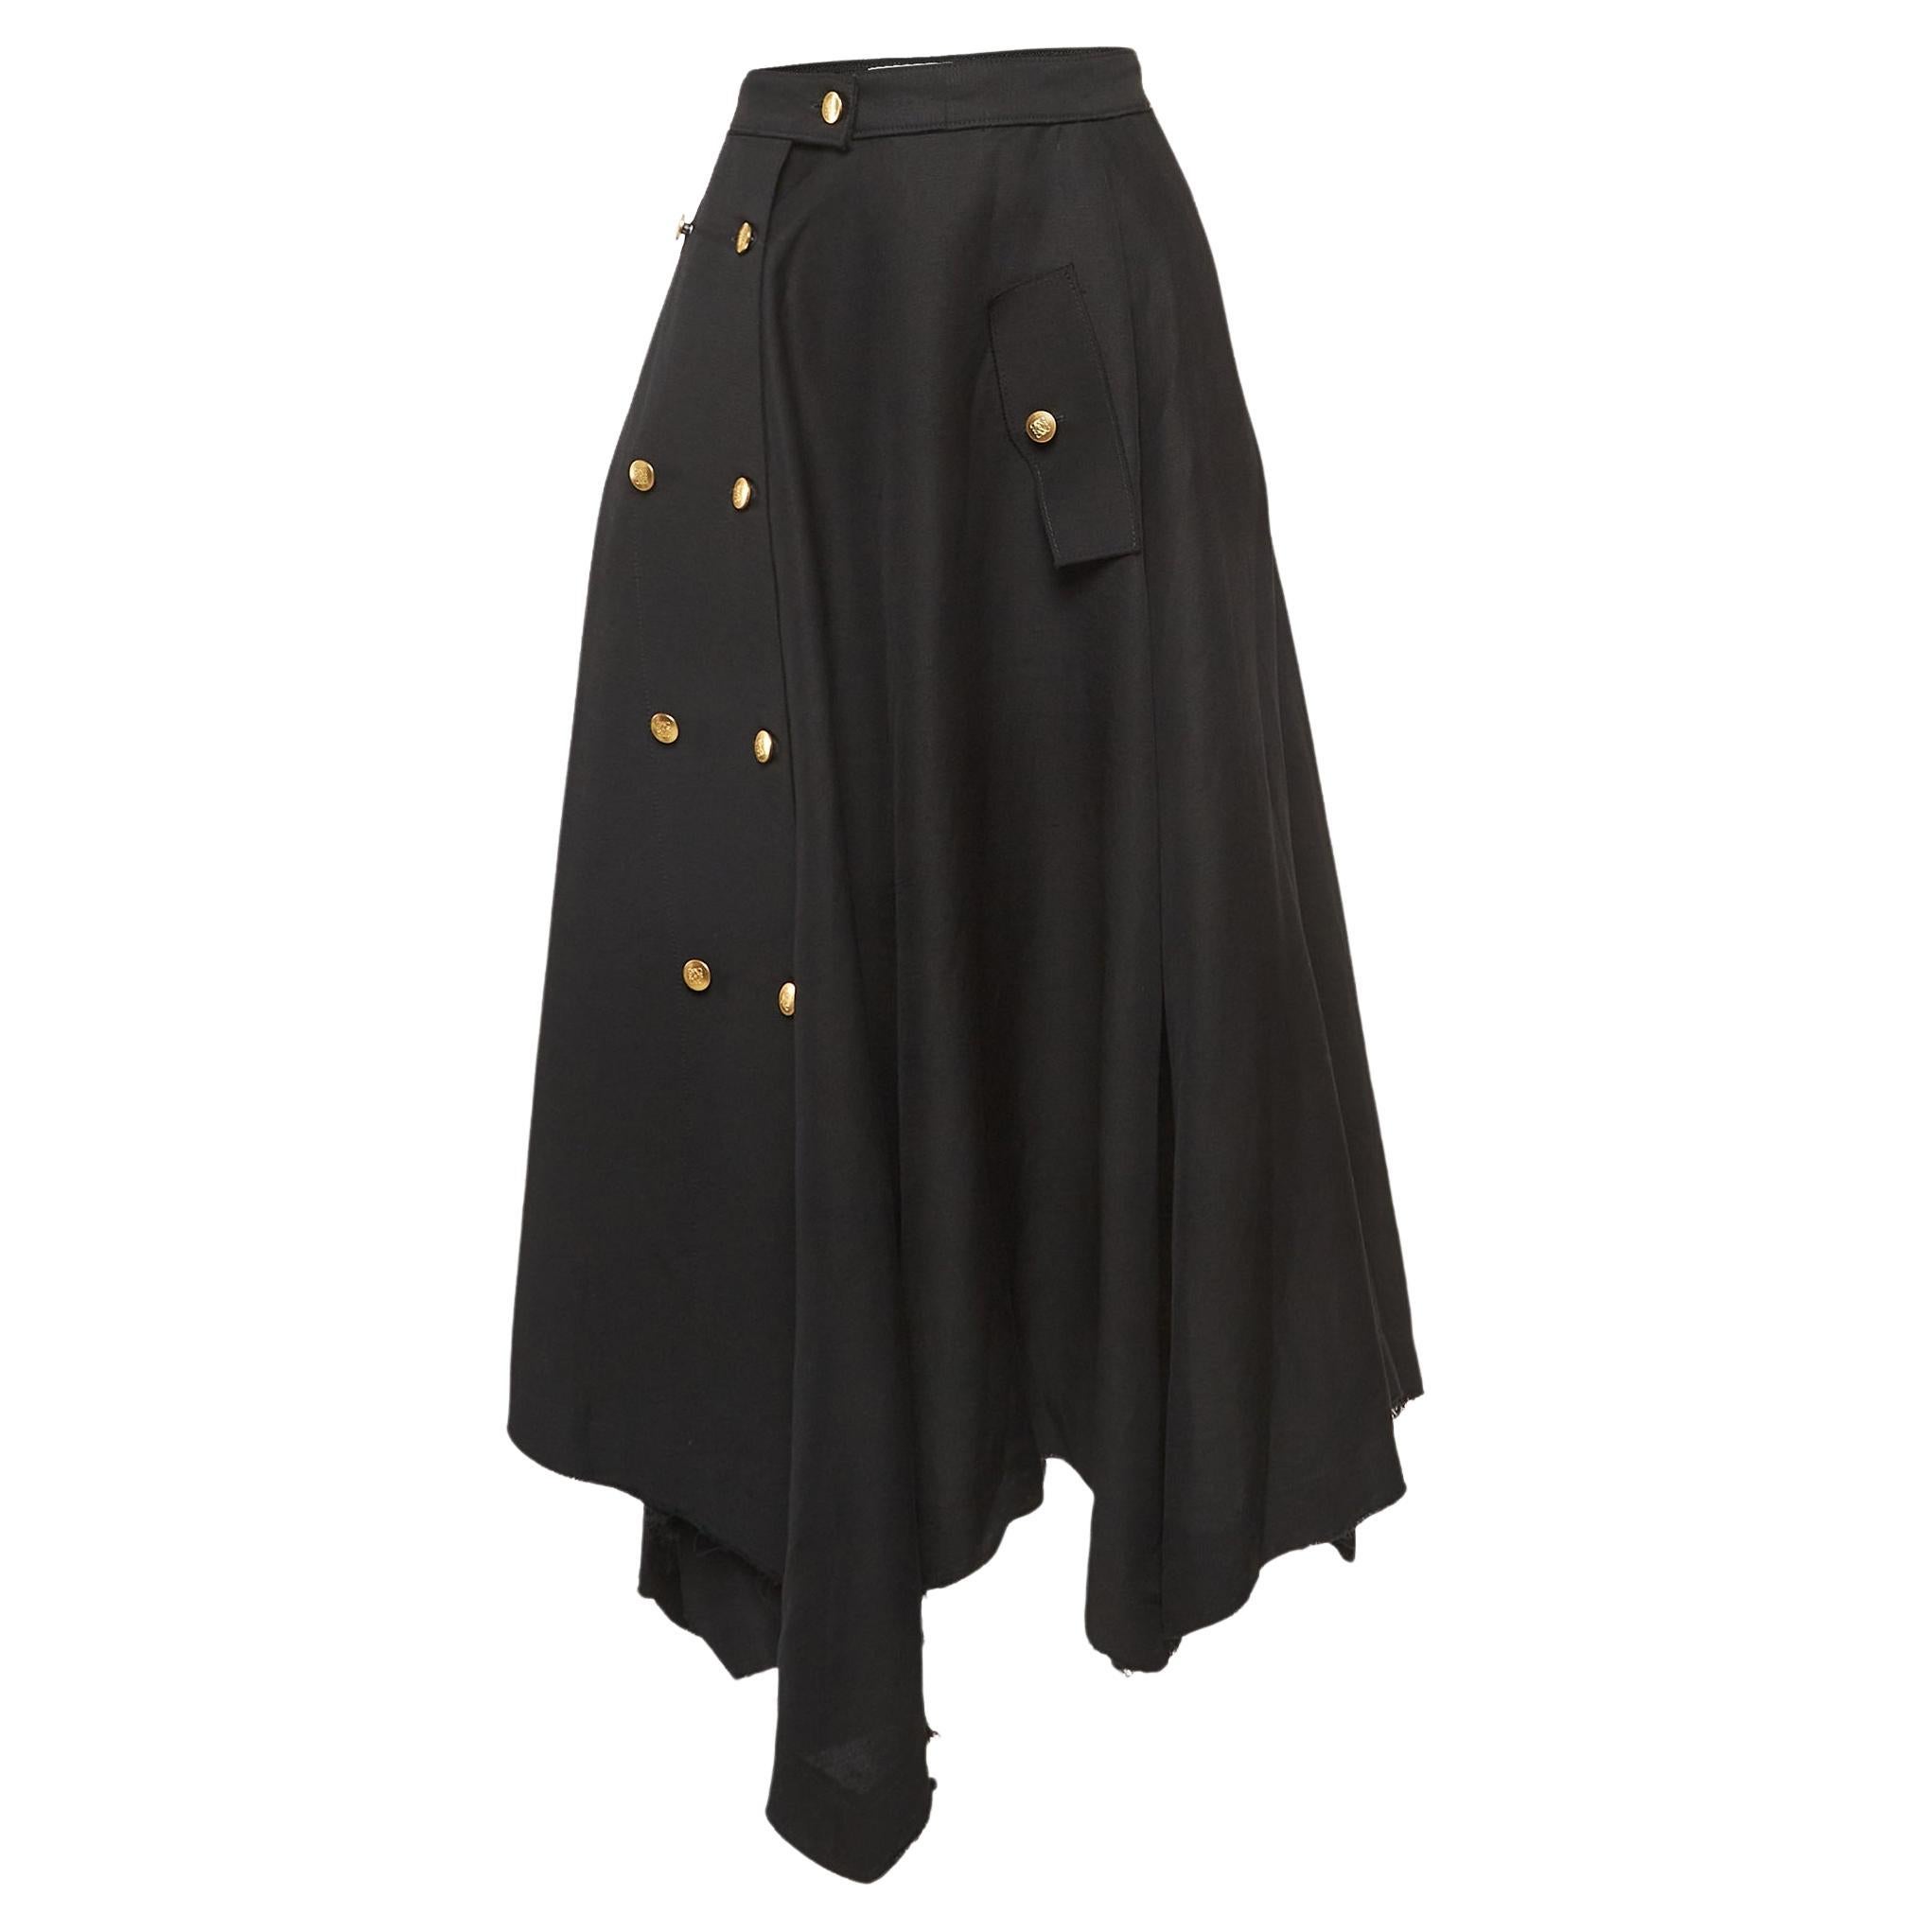 Loewe Black Raw Edge Linen Blend Button Detail Asymmetric Midi Skirt S